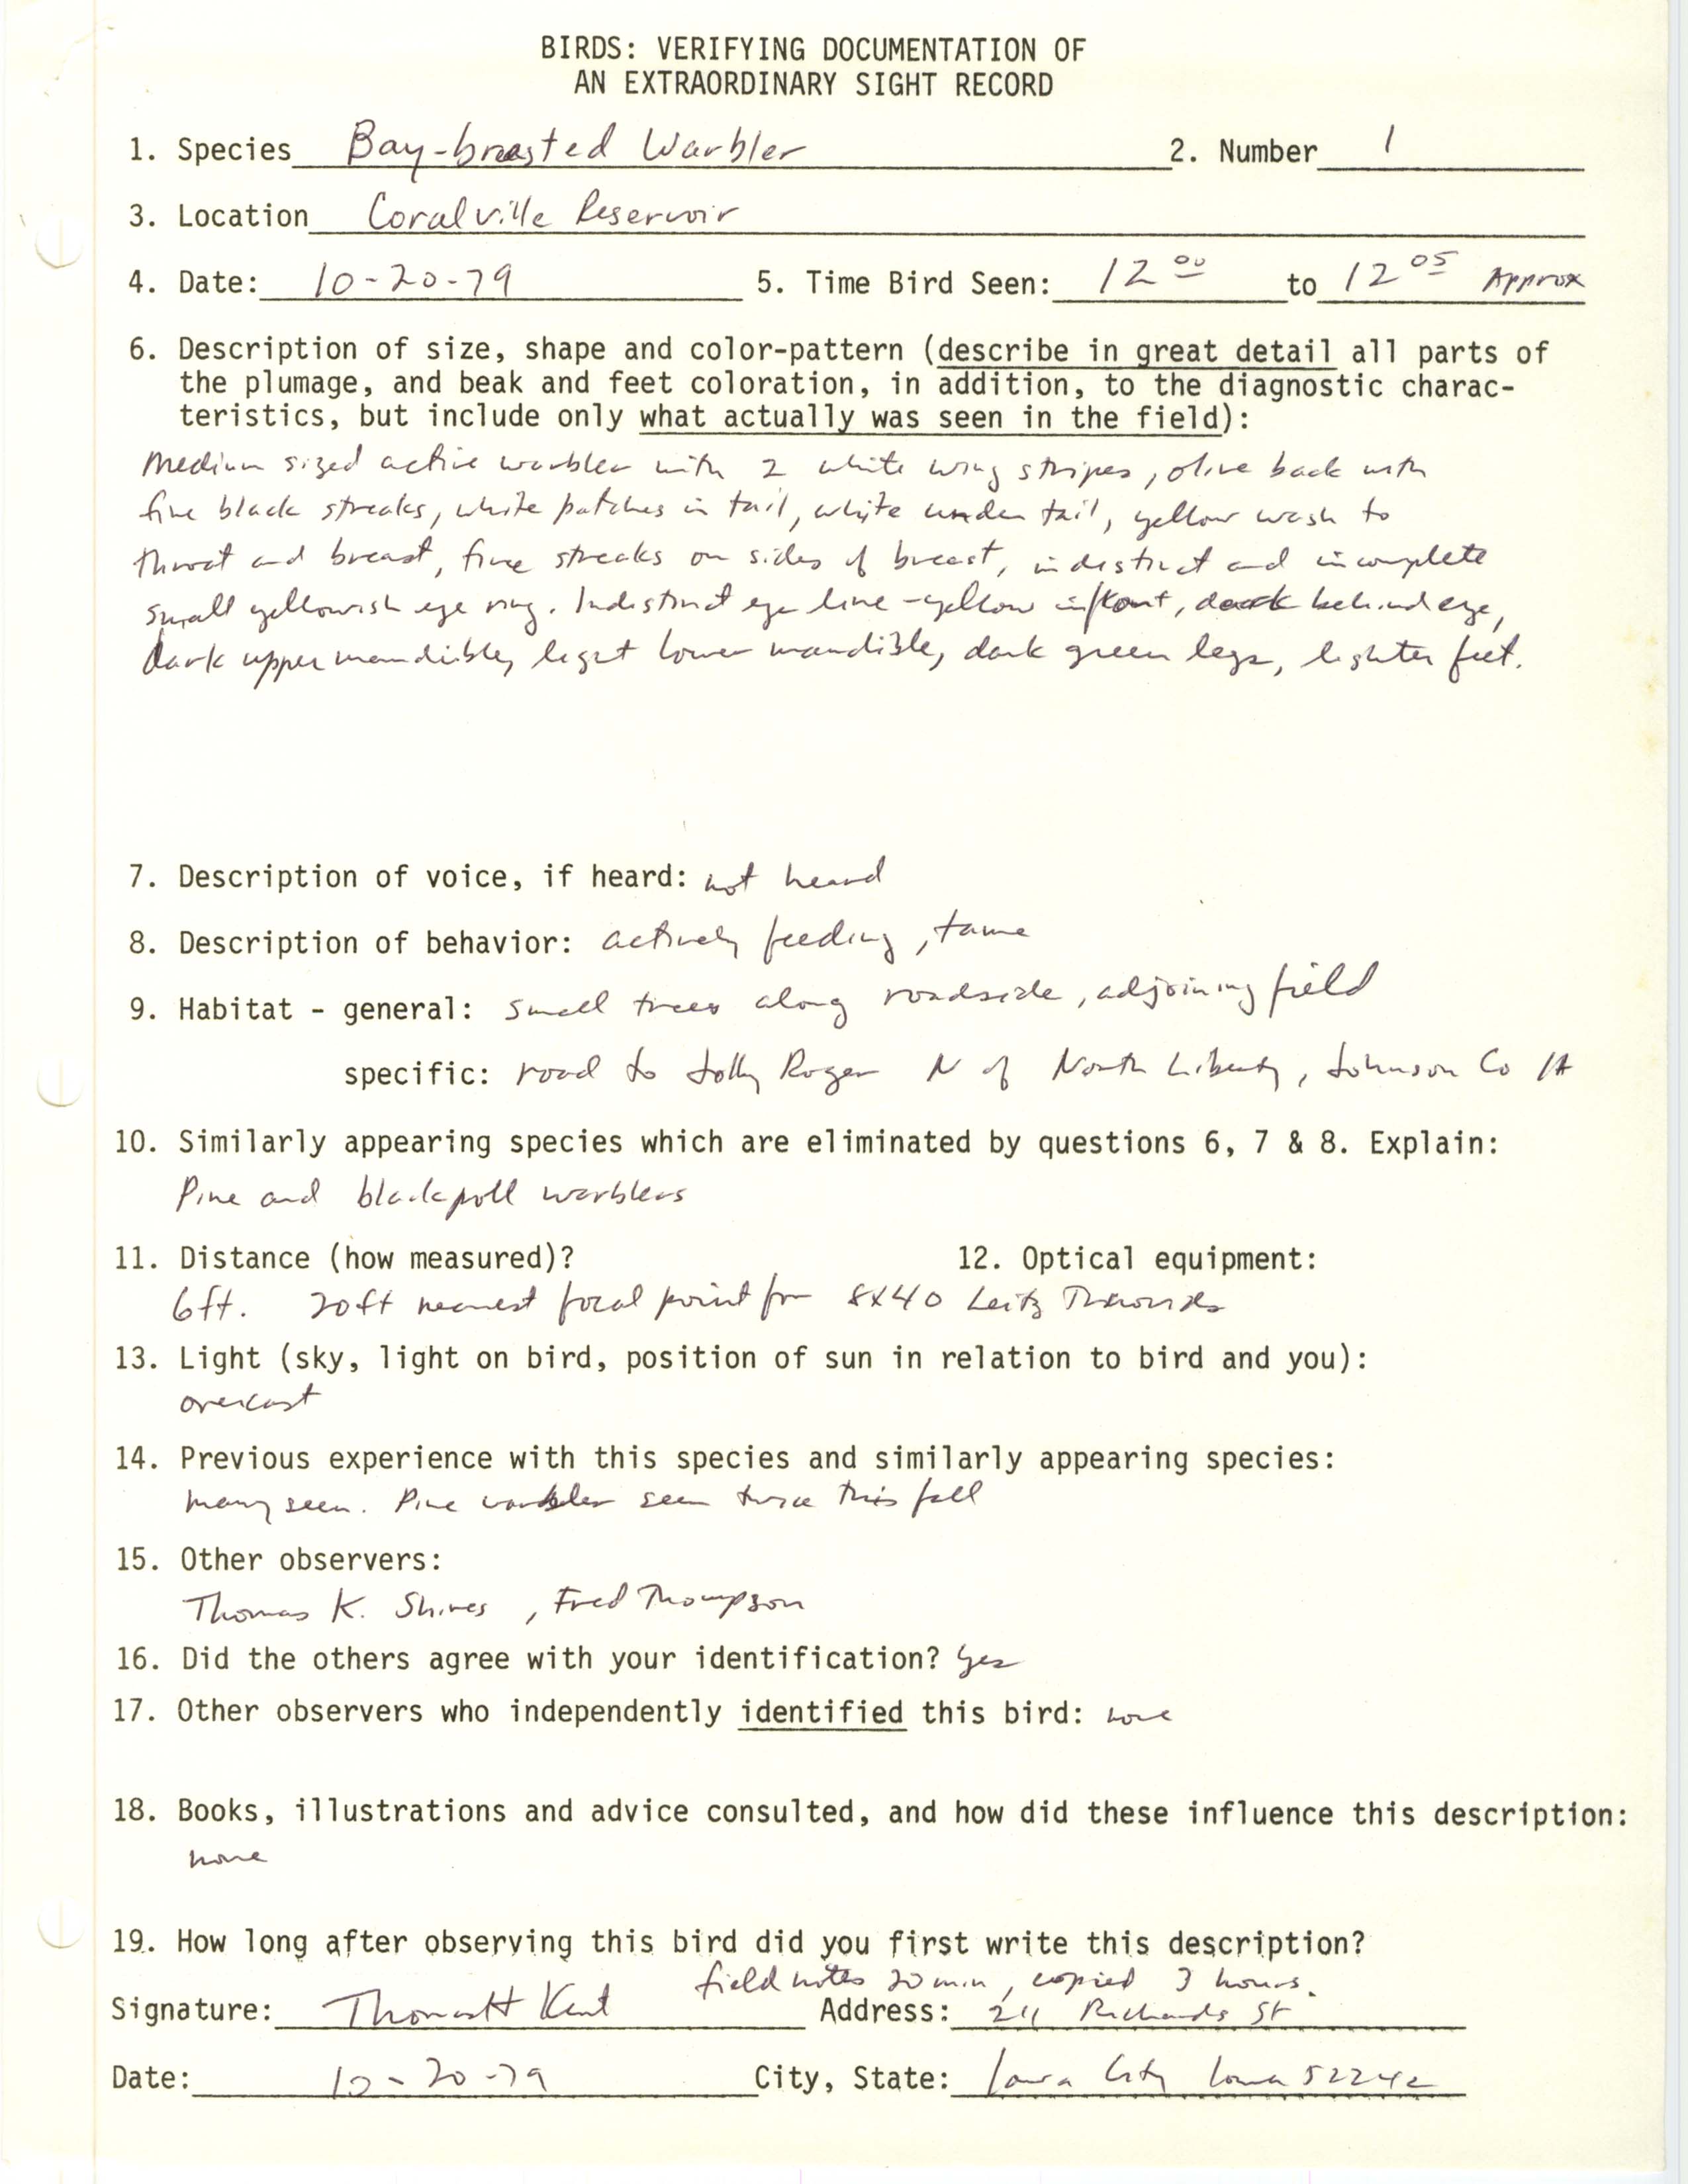 Rare bird documentation form for Bay-breasted Warbler at Coralville Reservoir, 1979